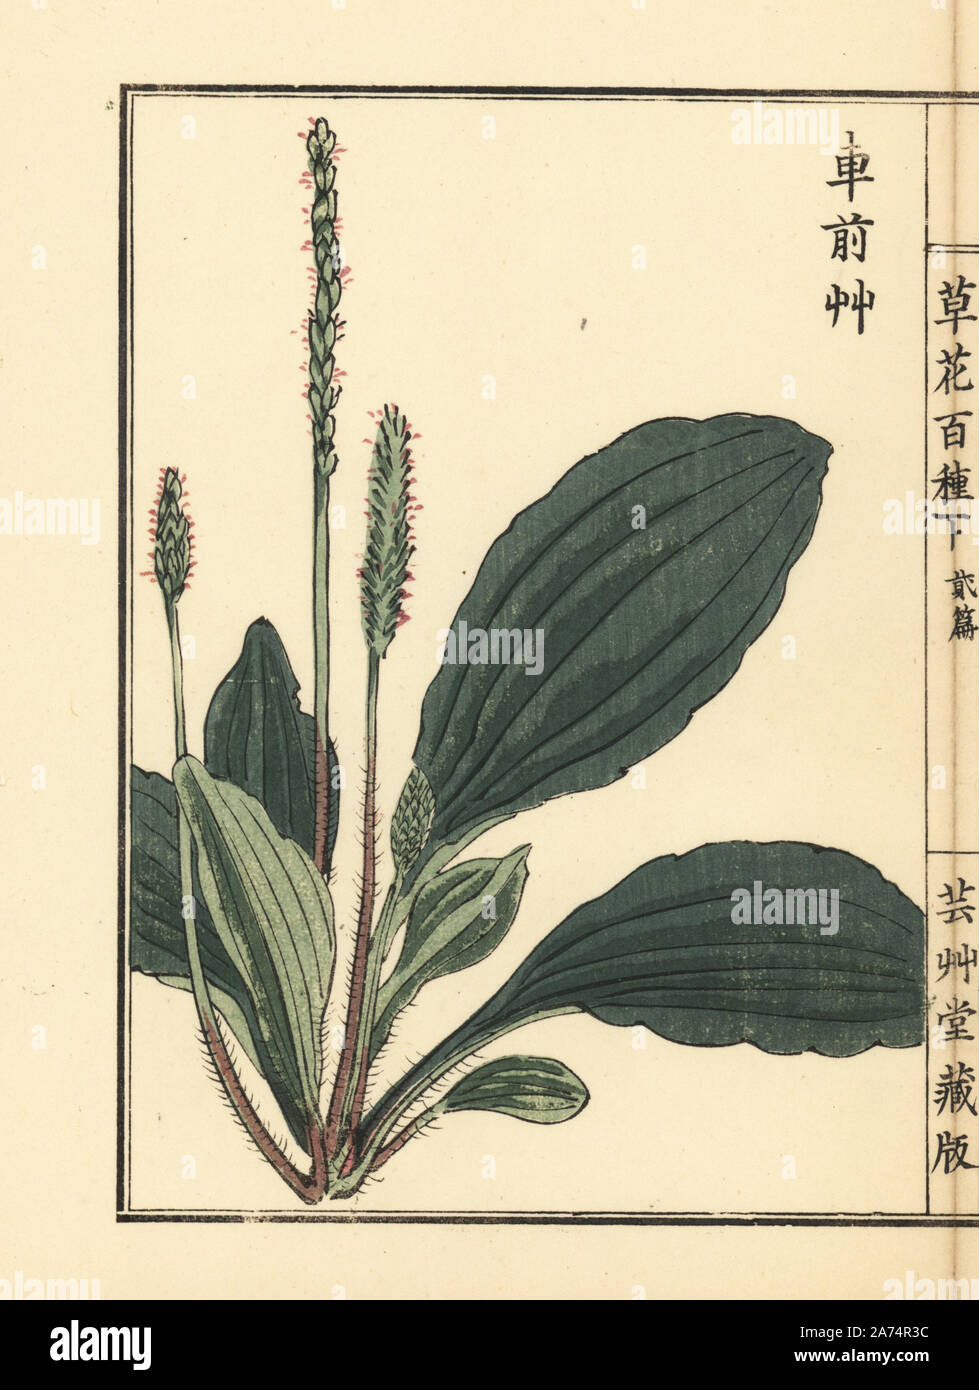 Shazensou, obako, or Chinese plantain, Plantago asiatica. Handcoloured woodblock print by Kono Bairei from Kusa Bana Hyakushu (One Hundred Varieties of Flowers), Tokyo, Yamada, 1901. Stock Photo